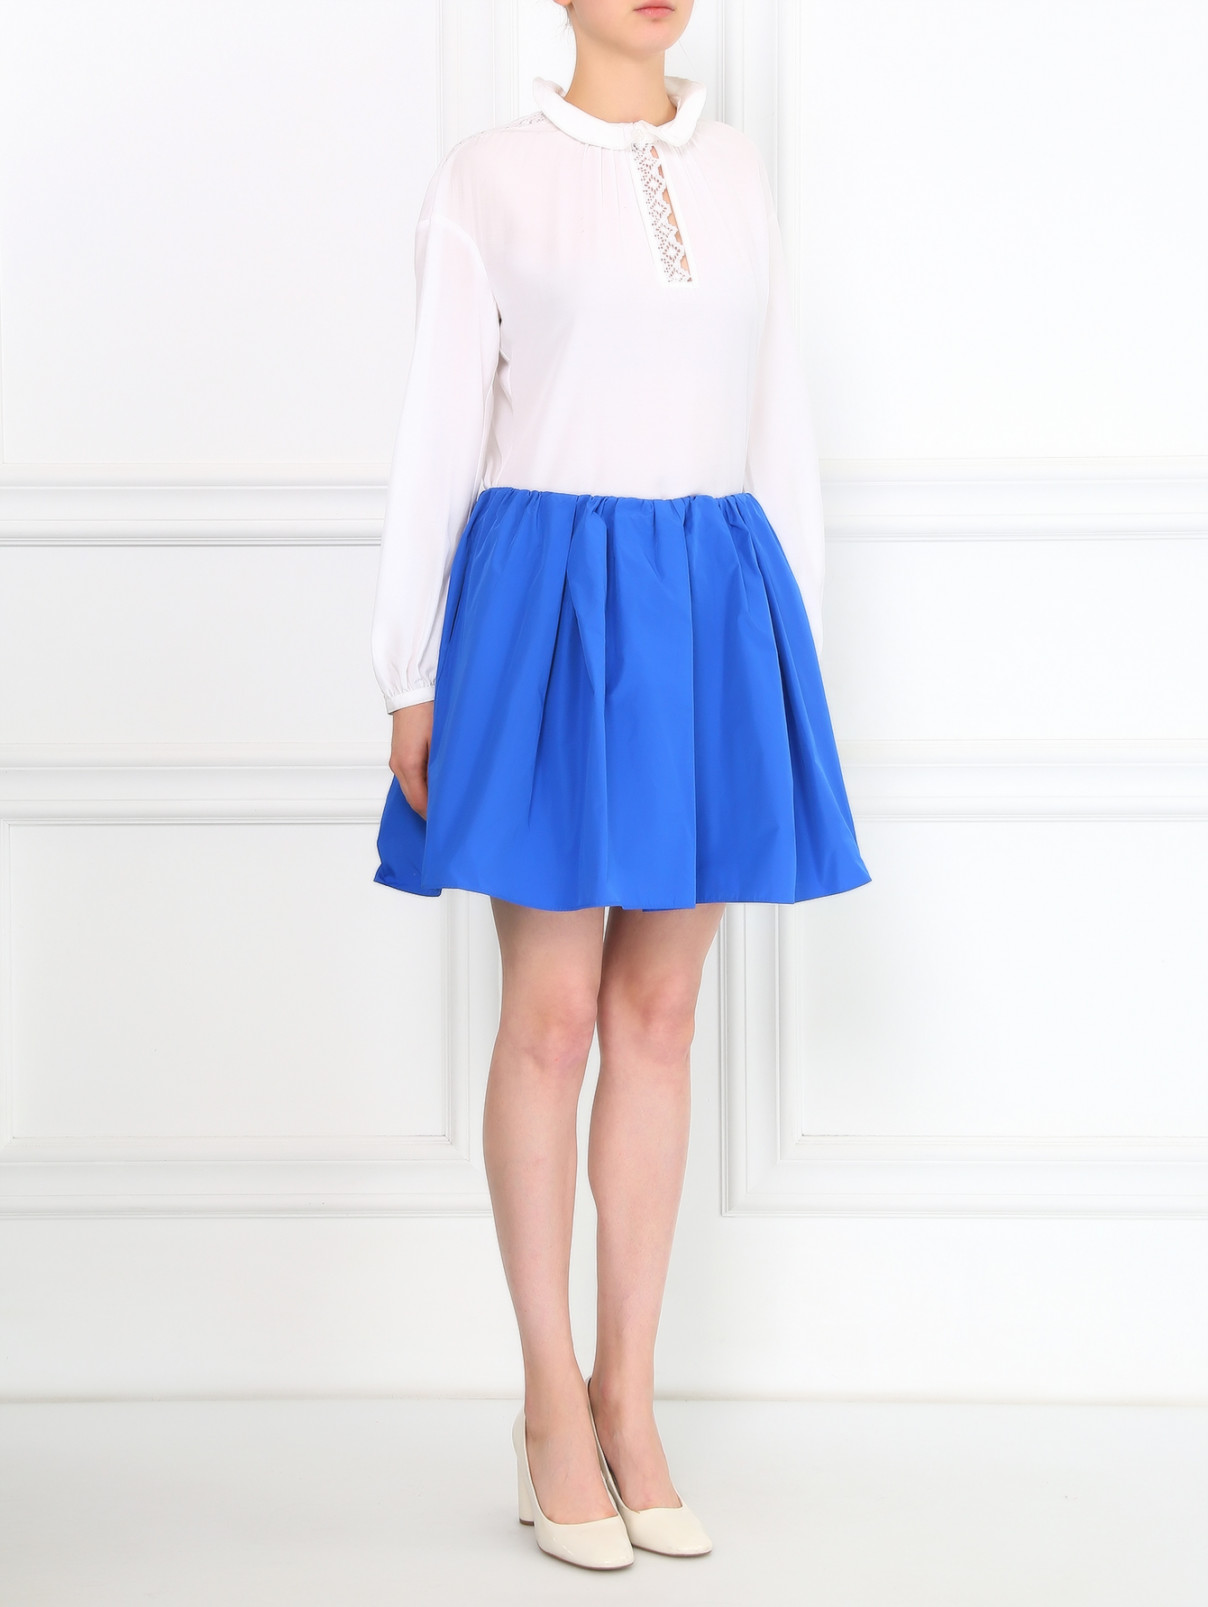 Однотонная юбка-мини Carven  –  Модель Общий вид  – Цвет:  Синий